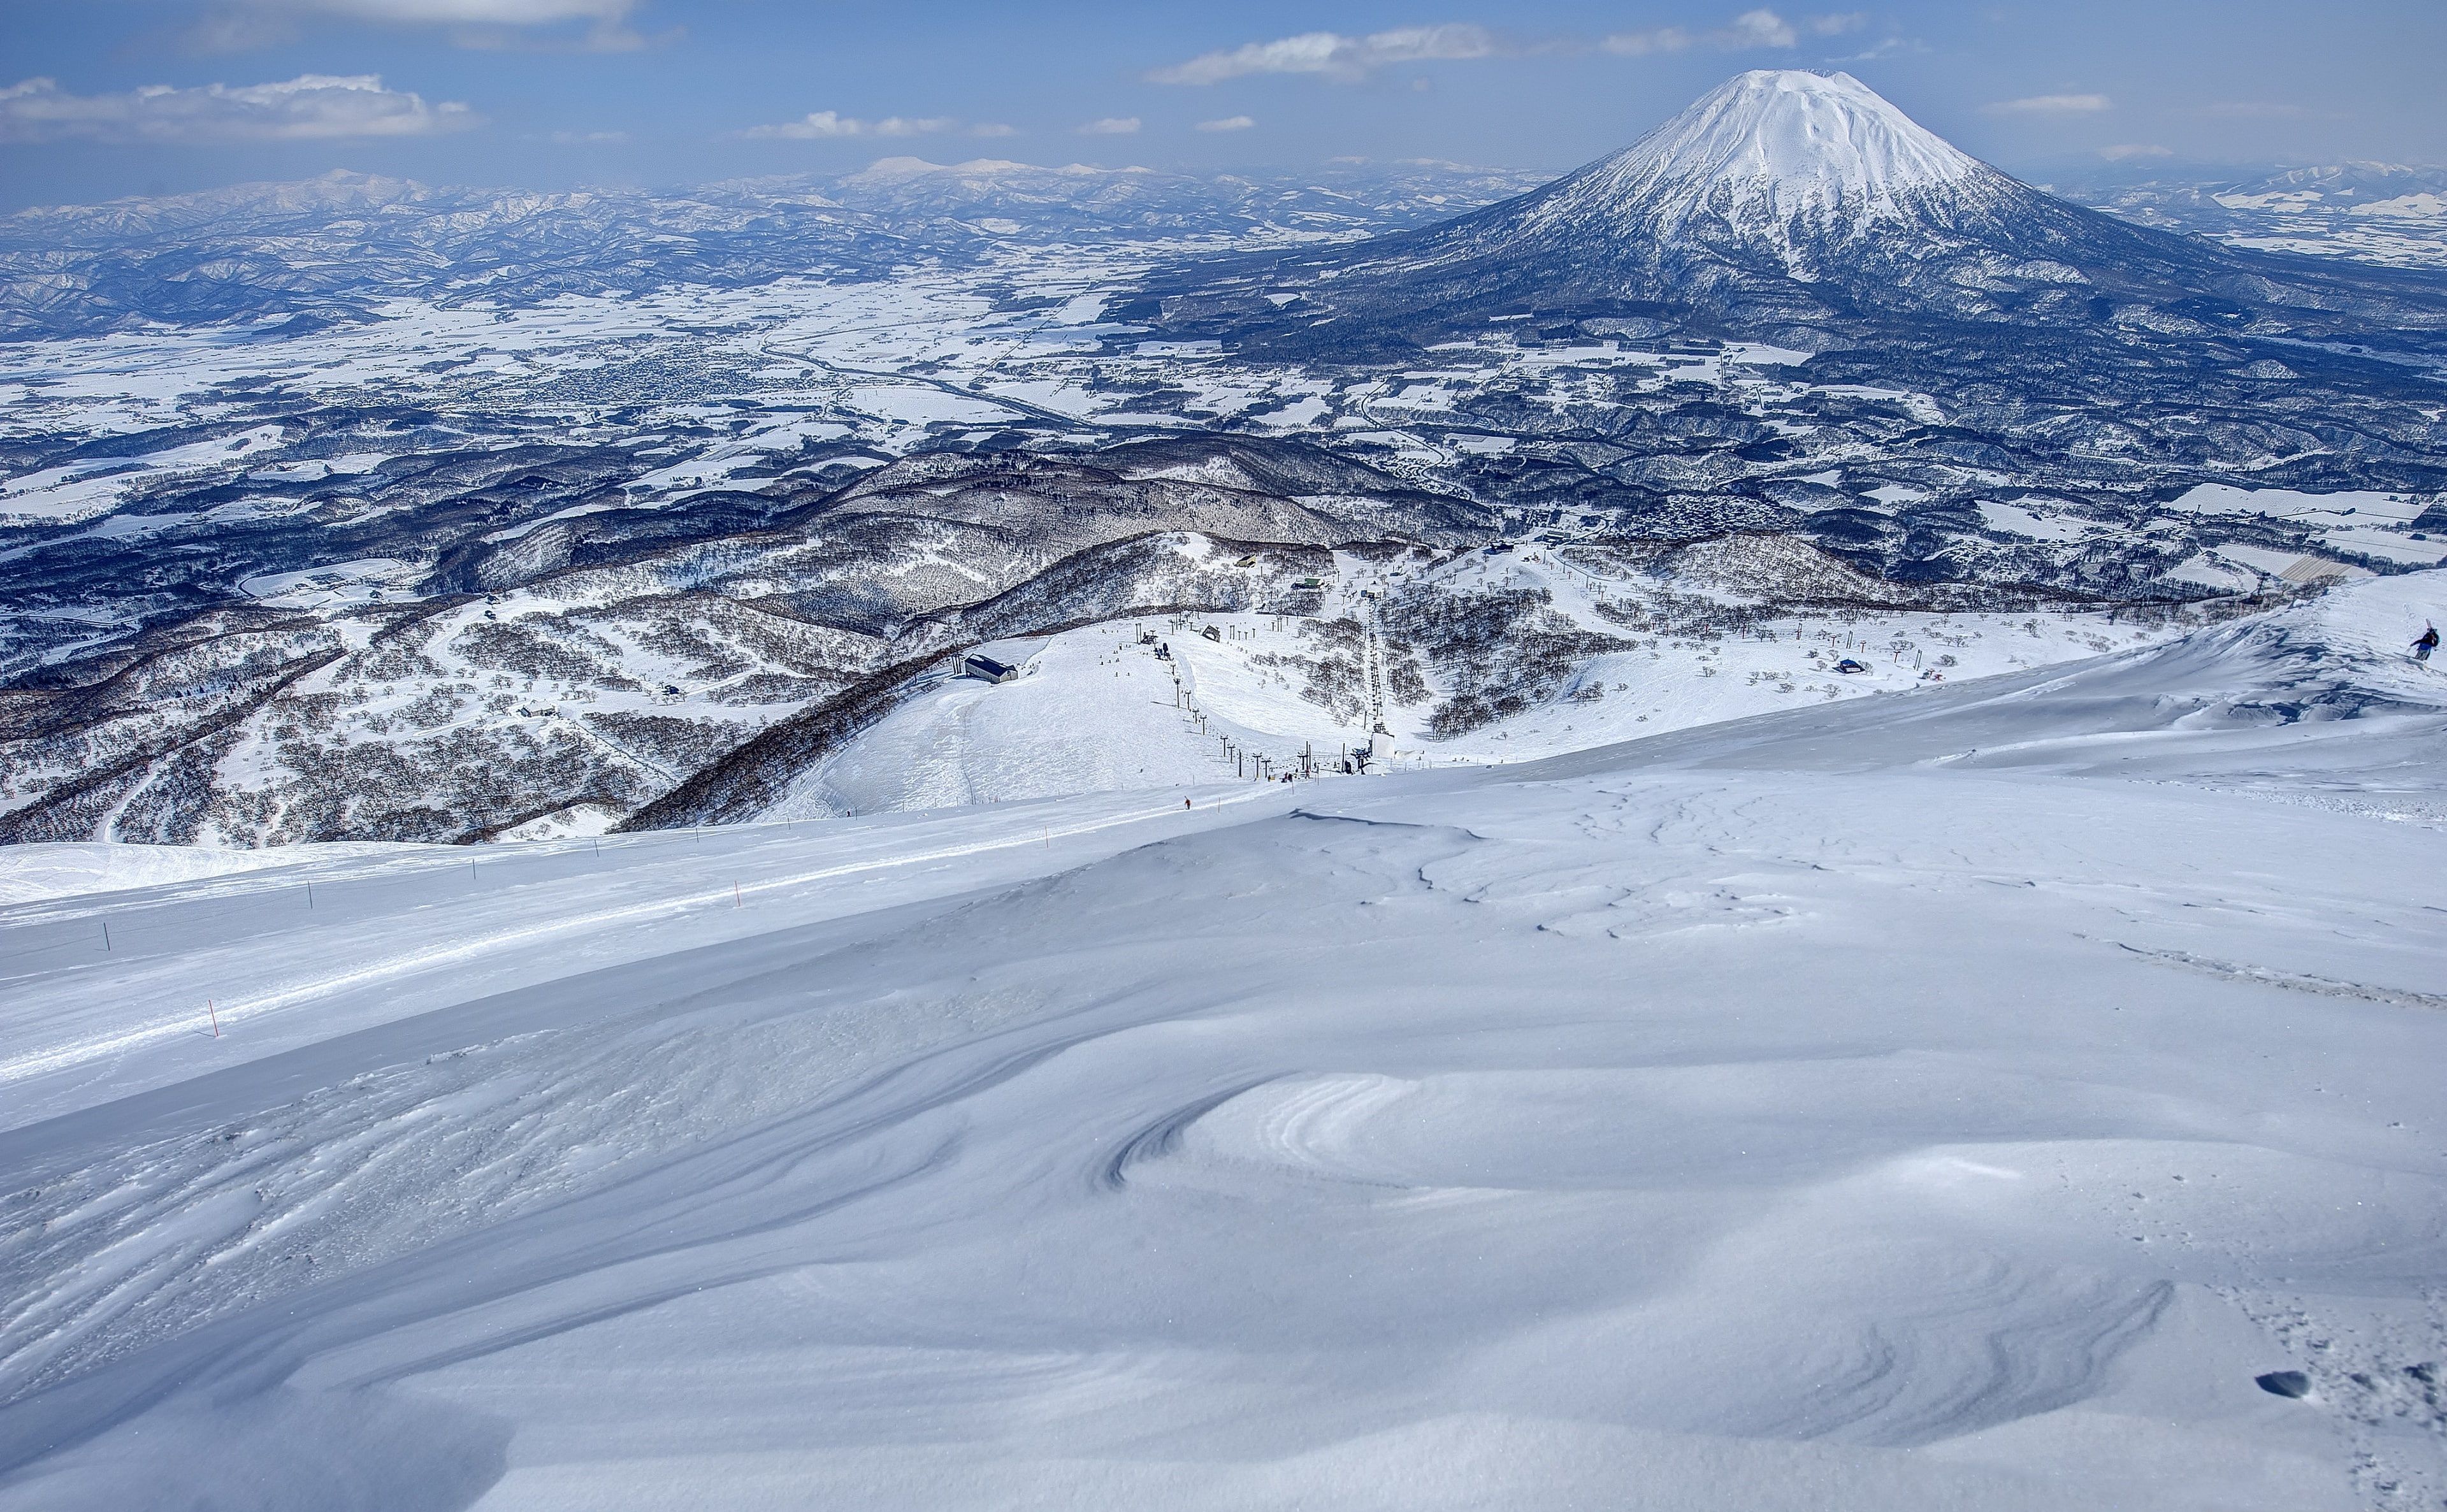 Mount Yotei #Asia #Japan #Winter #Mountain #Asia #Resort #Japan #Snow #d700 #hokkaido #grandhirafu #mtyotei K #wallpaper. Japan winter, Mountain resort, Resort